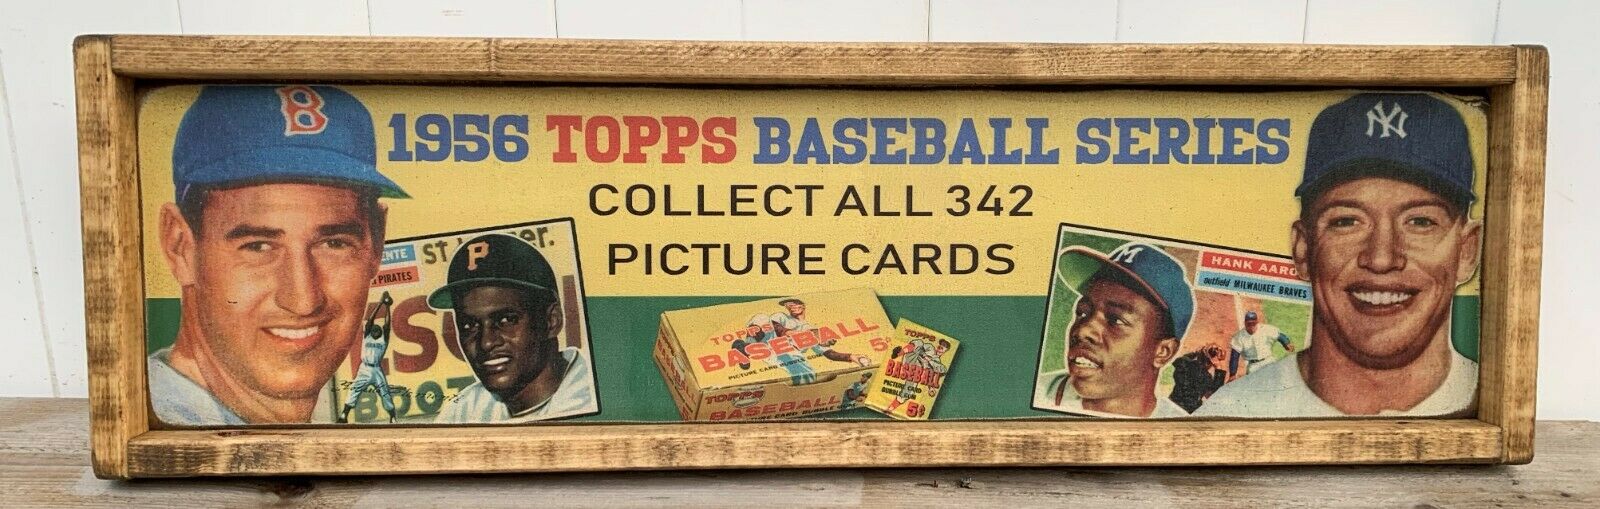 9x36 1956 Topps Baseball Vintage Style Wooden Baseball Card Advertising Sign